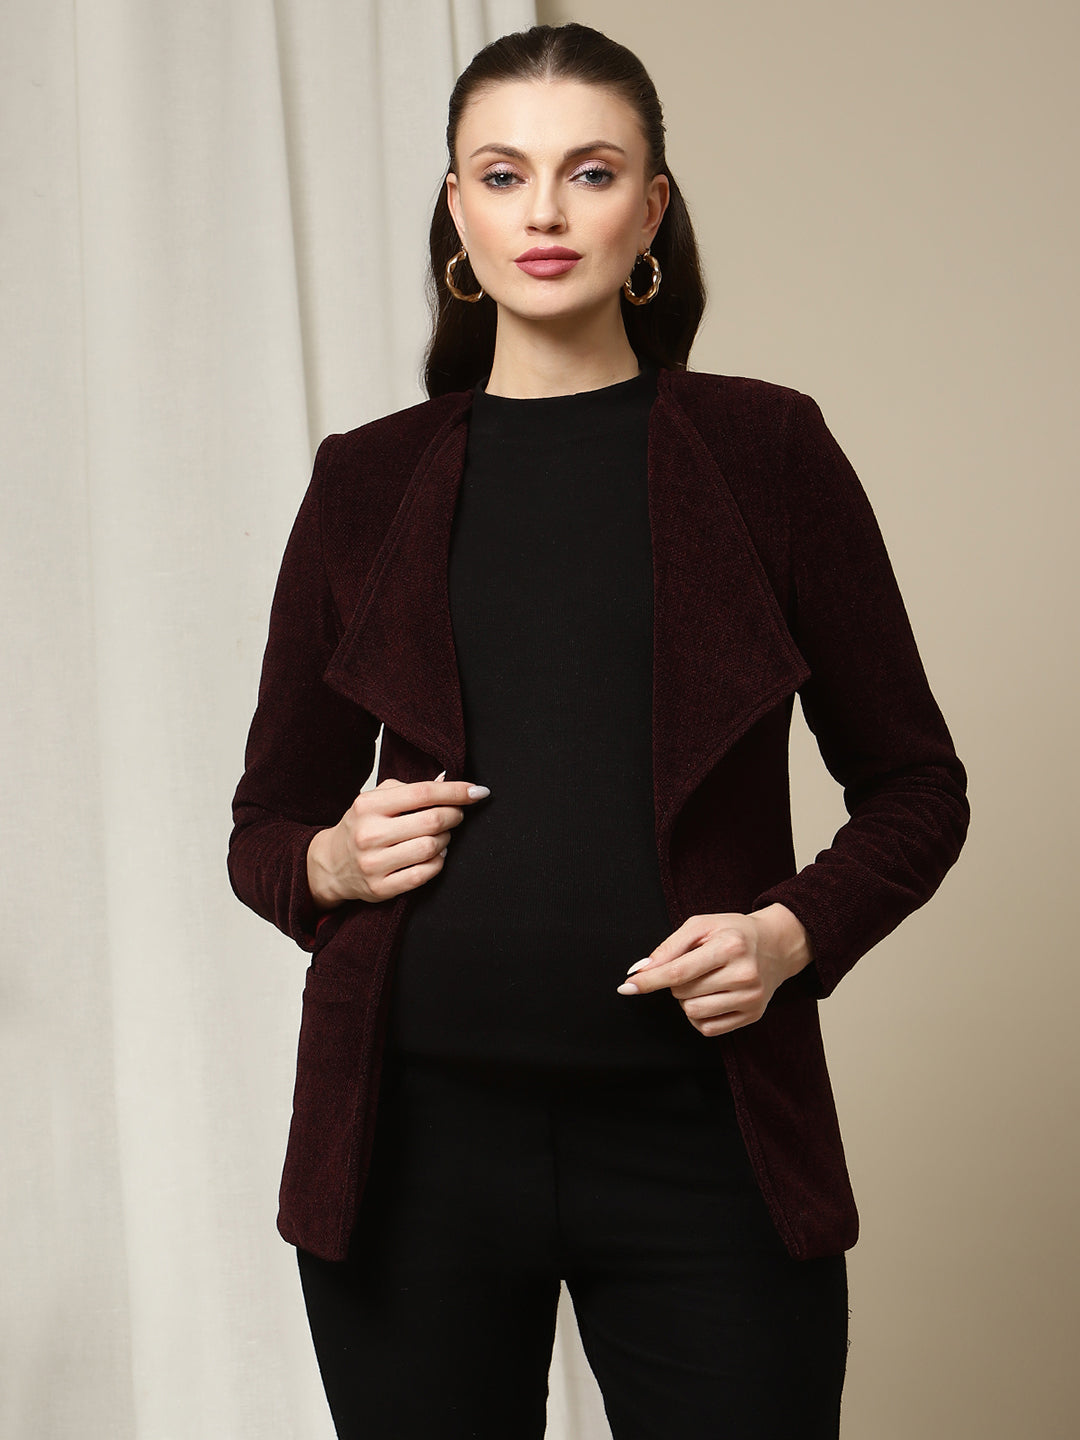 Asymmetrical Wool Coat in Black, Winter Coat Women, Wool Coat, High Collar Wool  Coat, Plus Size Coat, Womens Autumn Winter Outfit C987 - Etsy